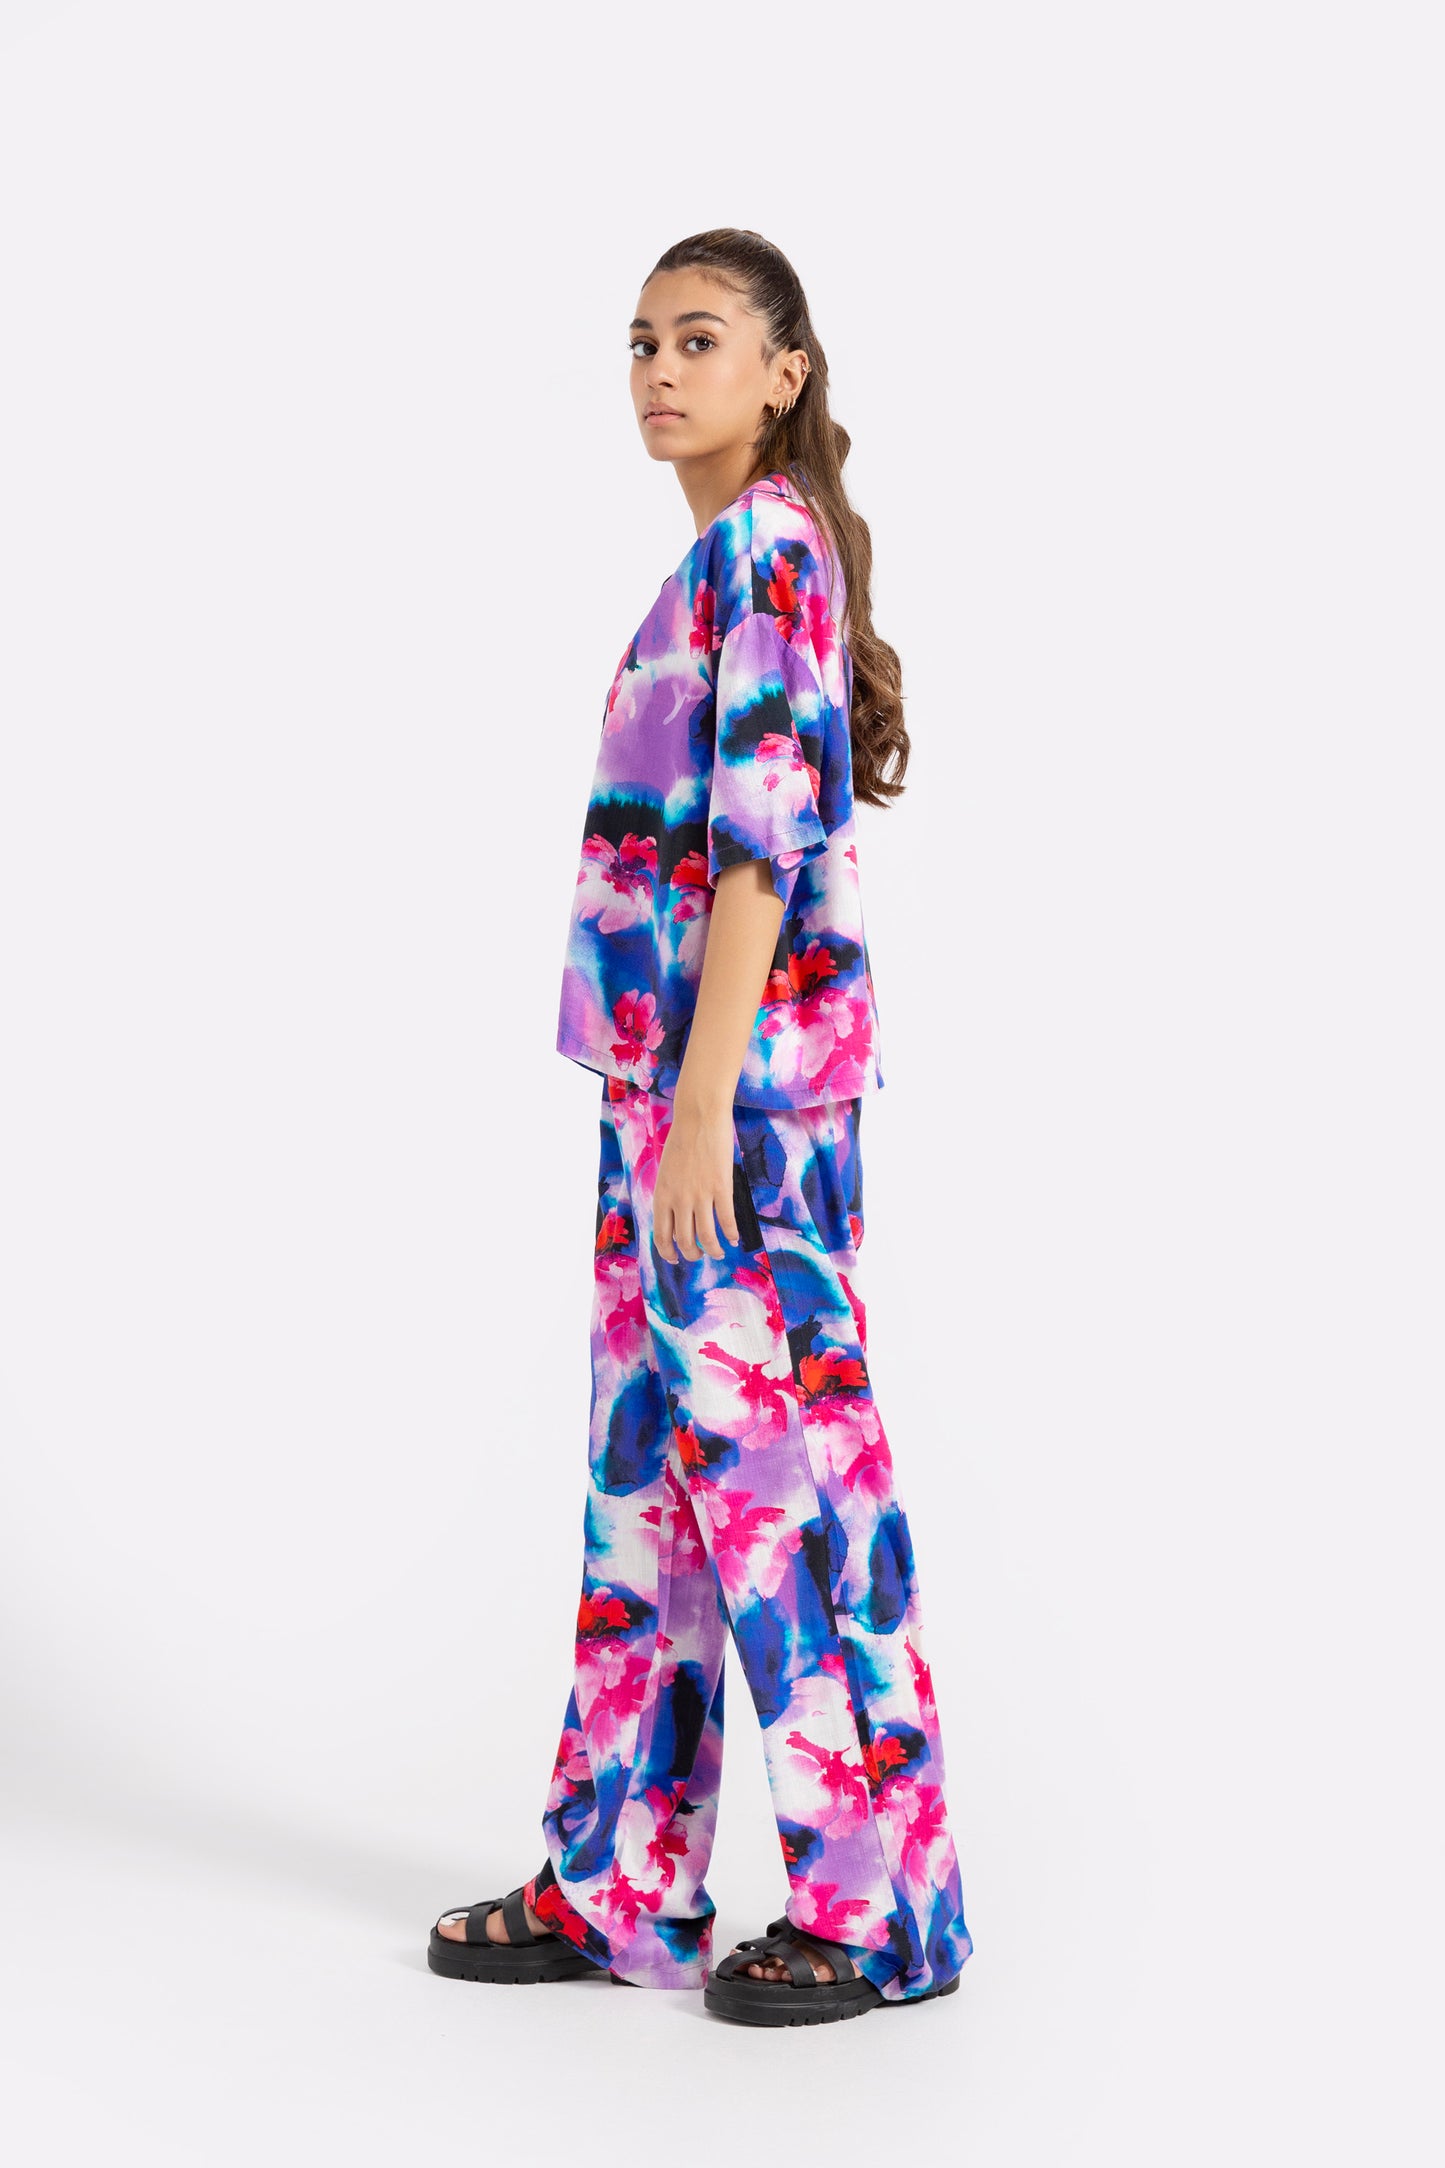 Watercolor floral printed suit